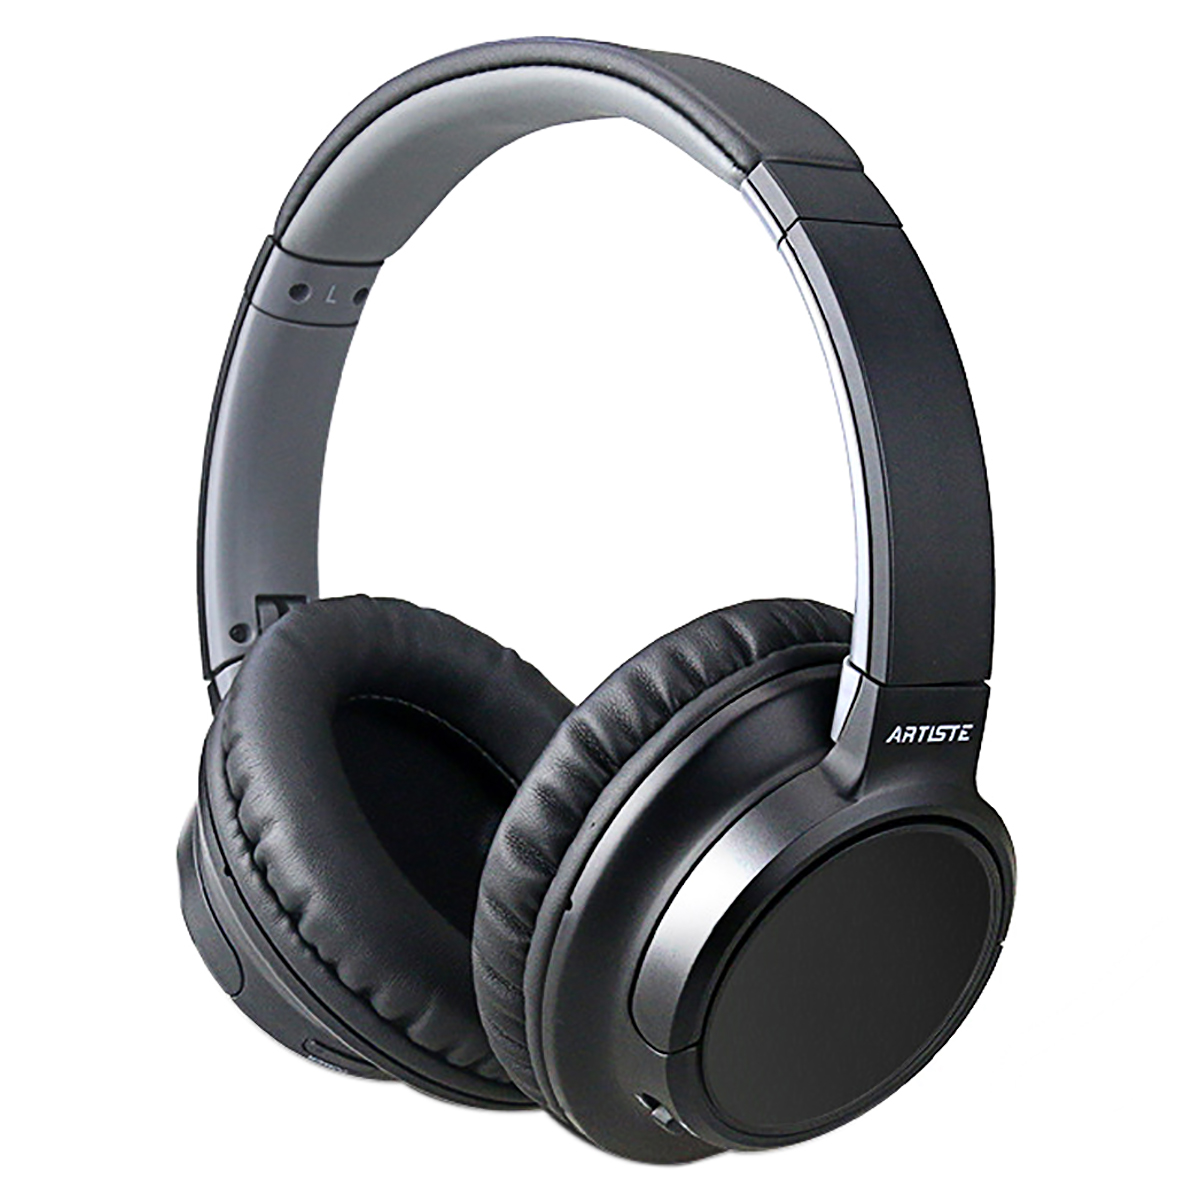 

ARTISTE B20 Wireless bluetooth 5.0 Headset HiFi Noise Cancelling Headphone for Phone PC